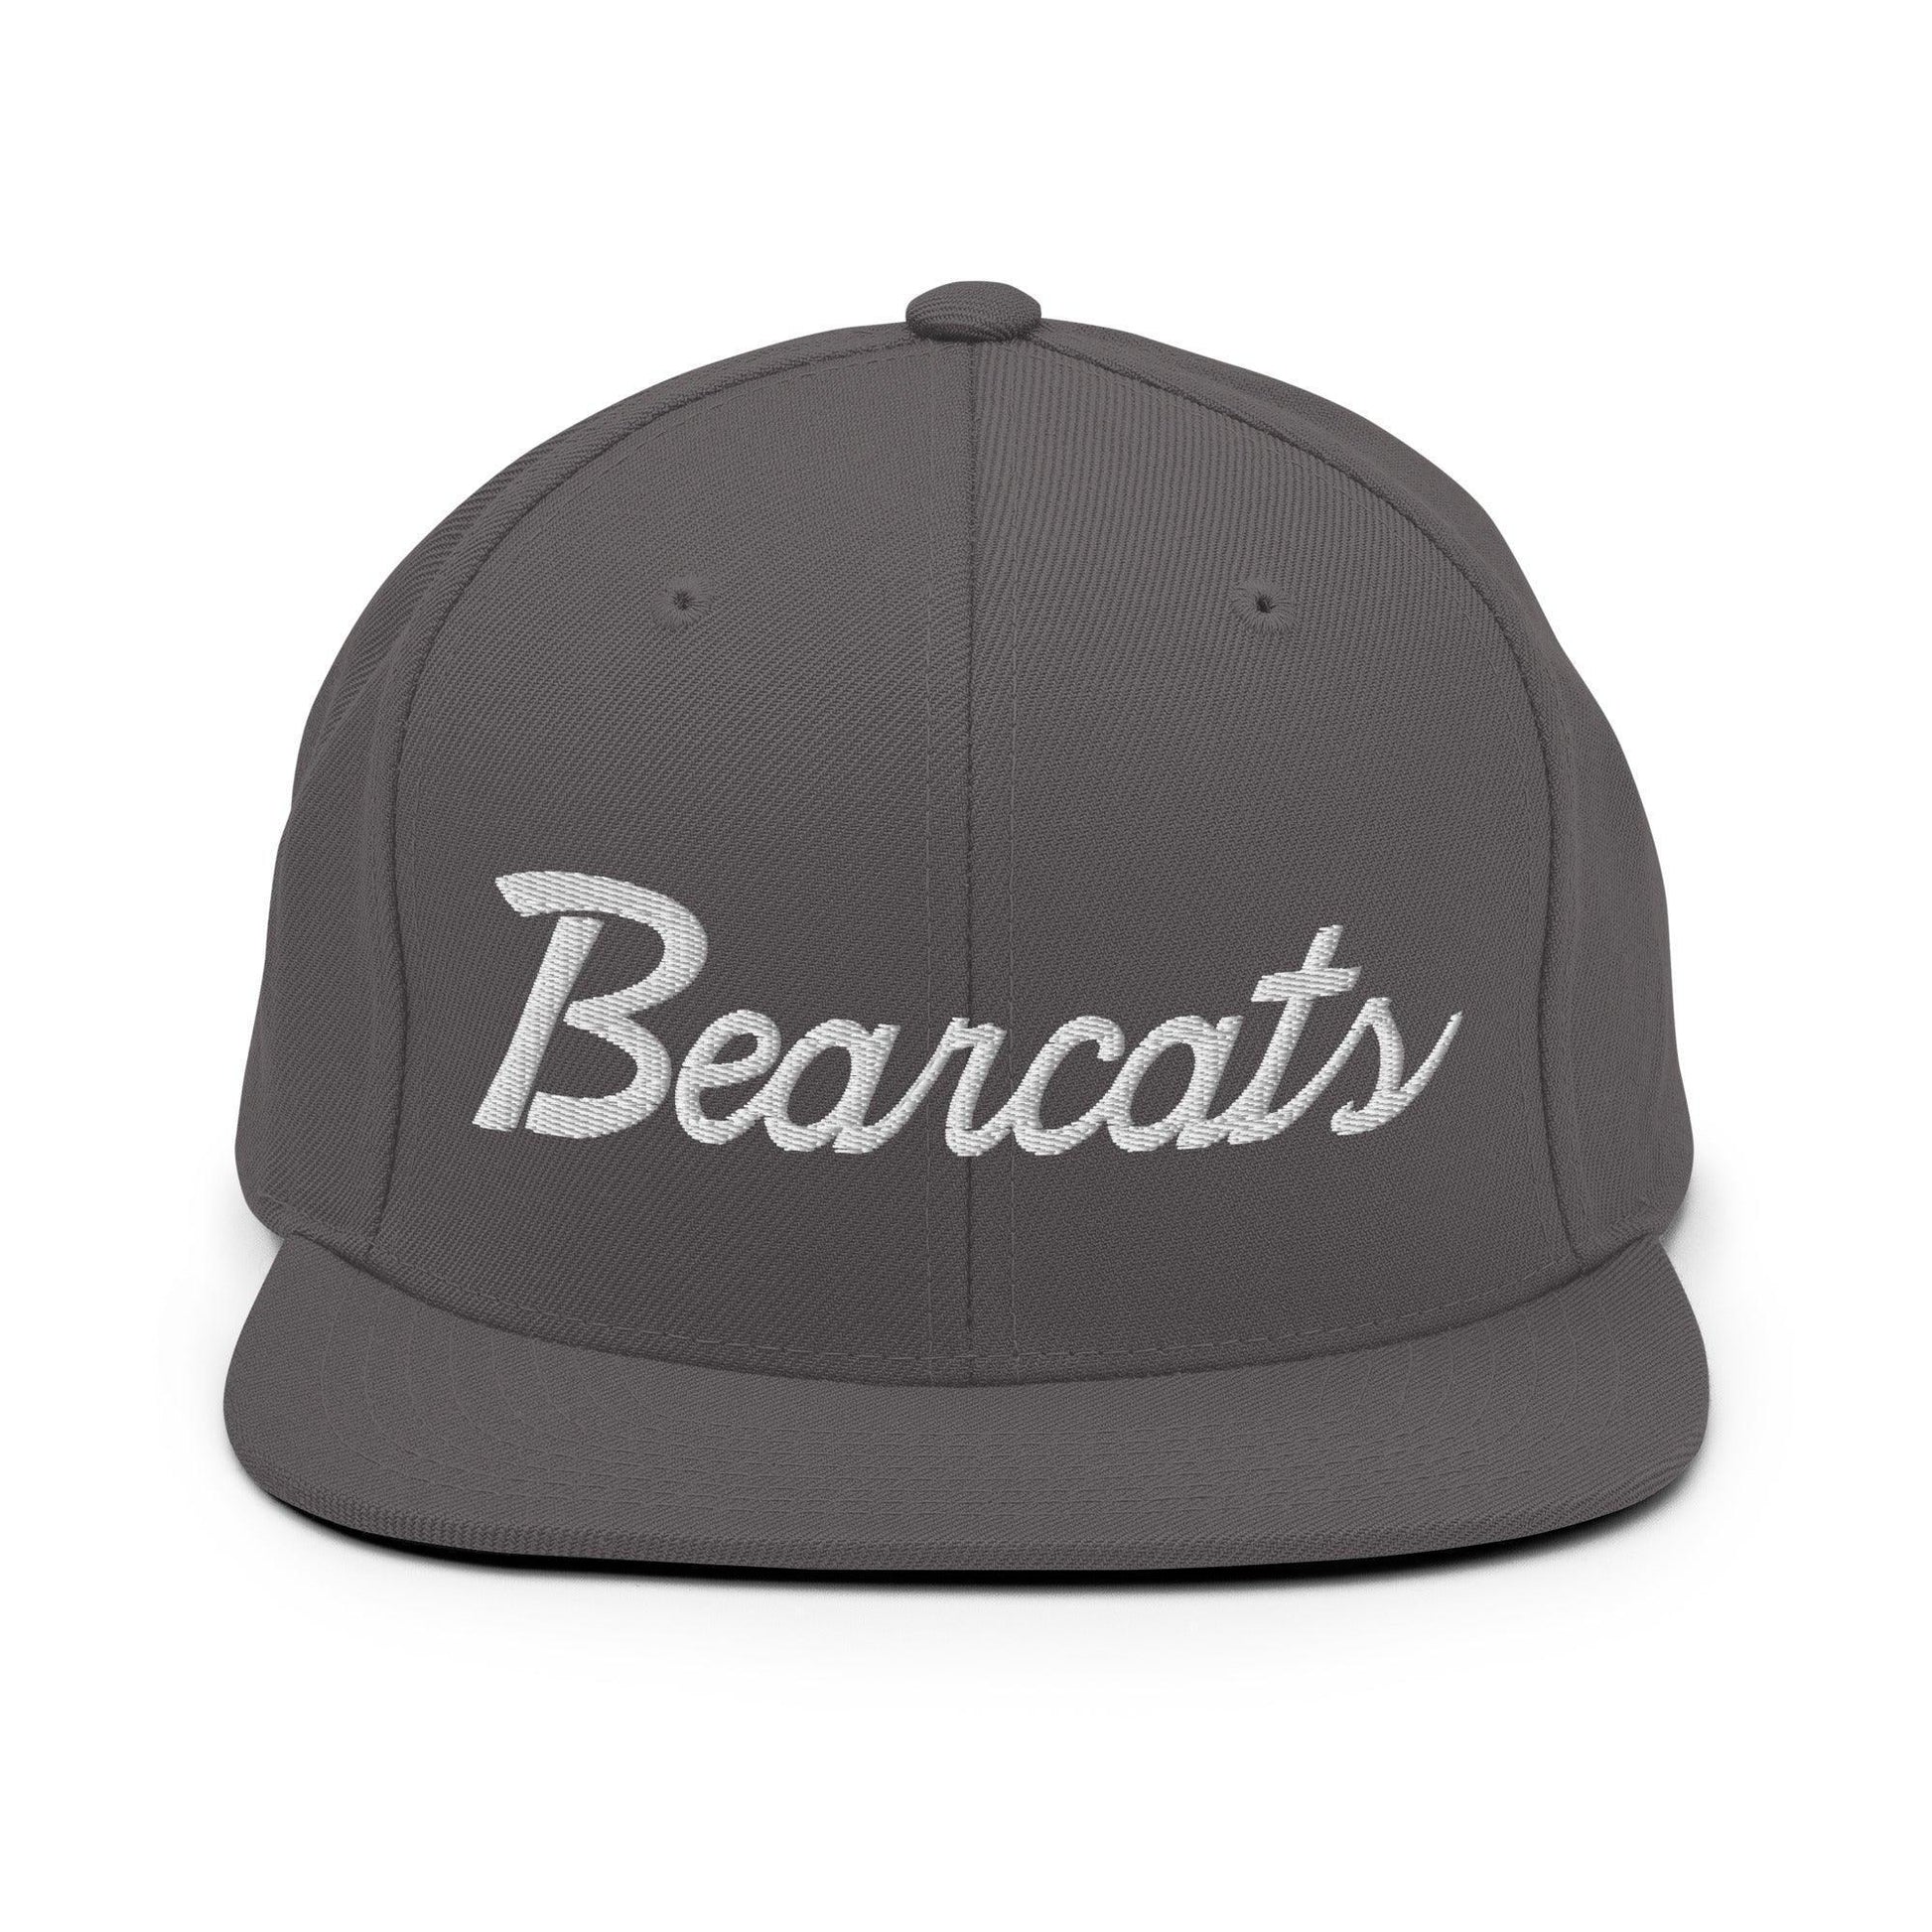 Bearcats School Mascot Script Snapback Hat Dark Grey